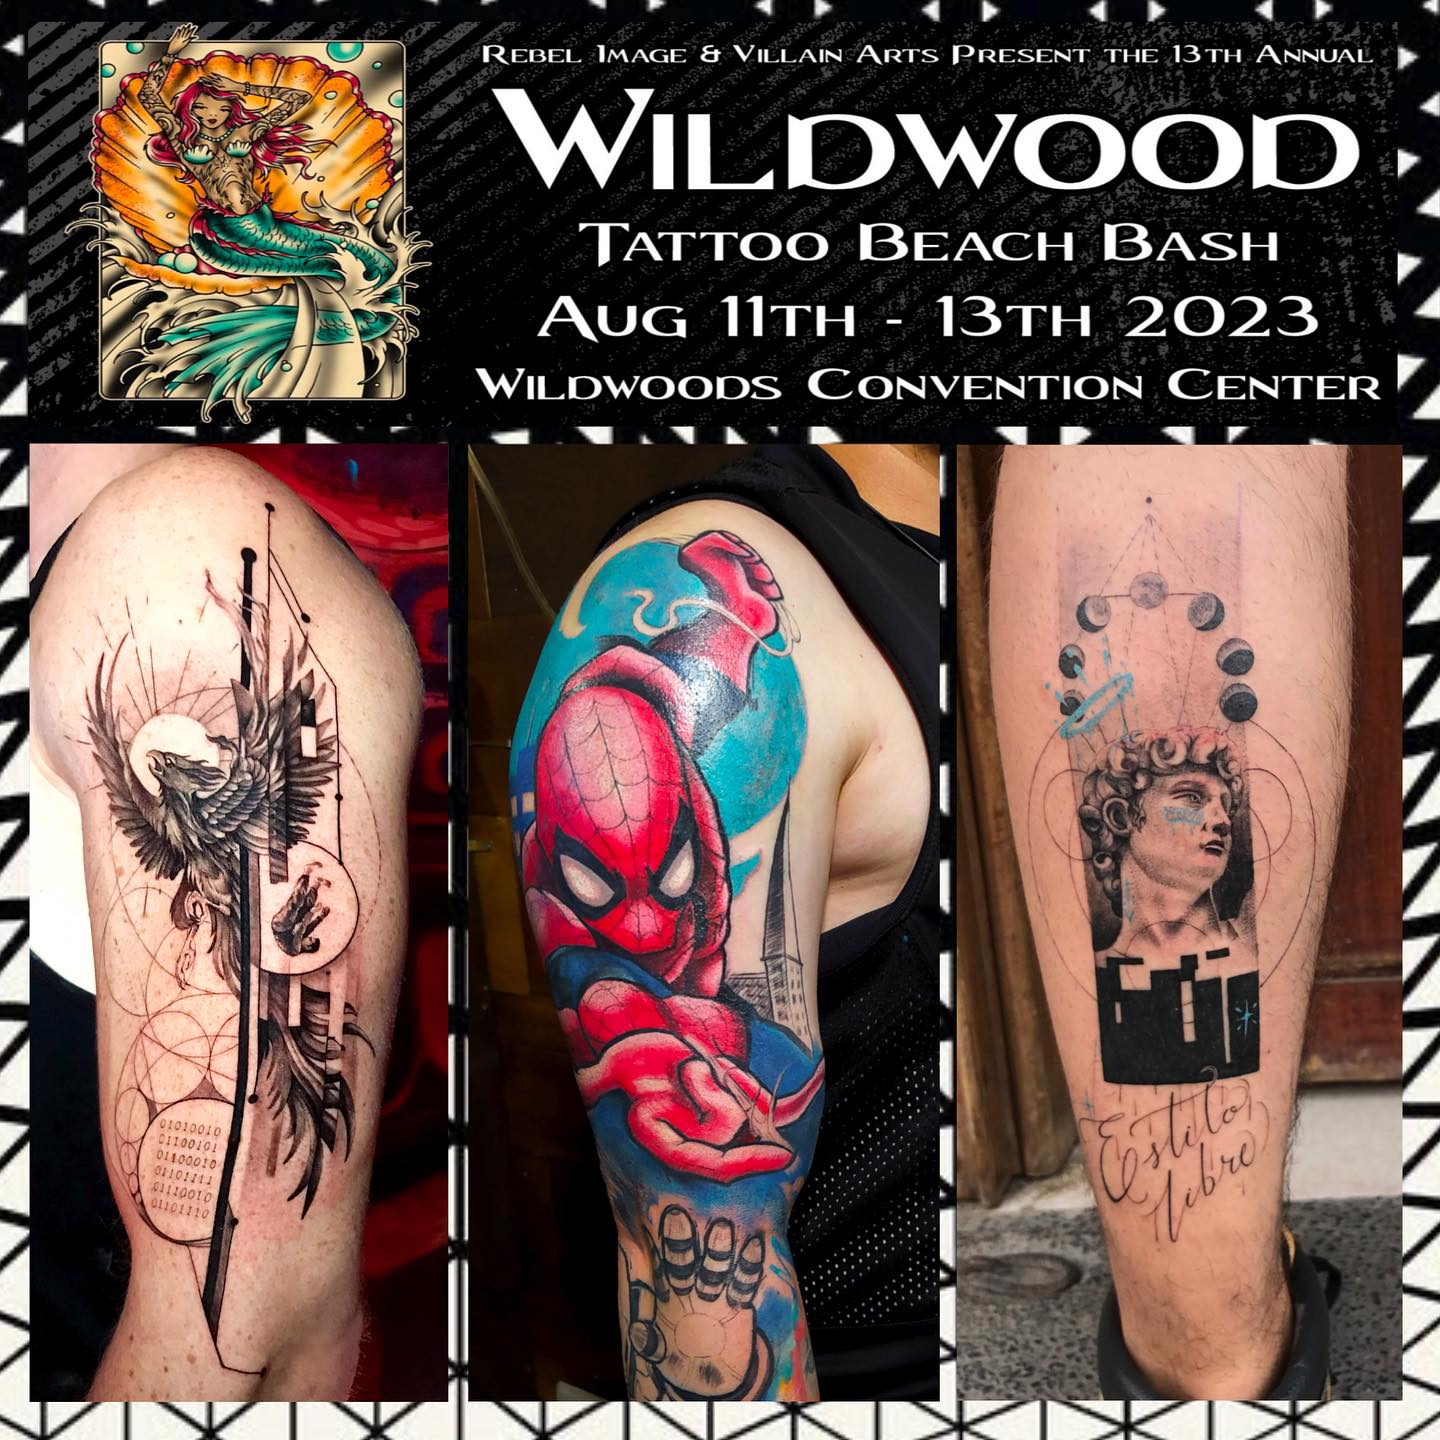 Capital Ink Tattoos 12 S Washington Ave, Dunellen New Jersey 08812